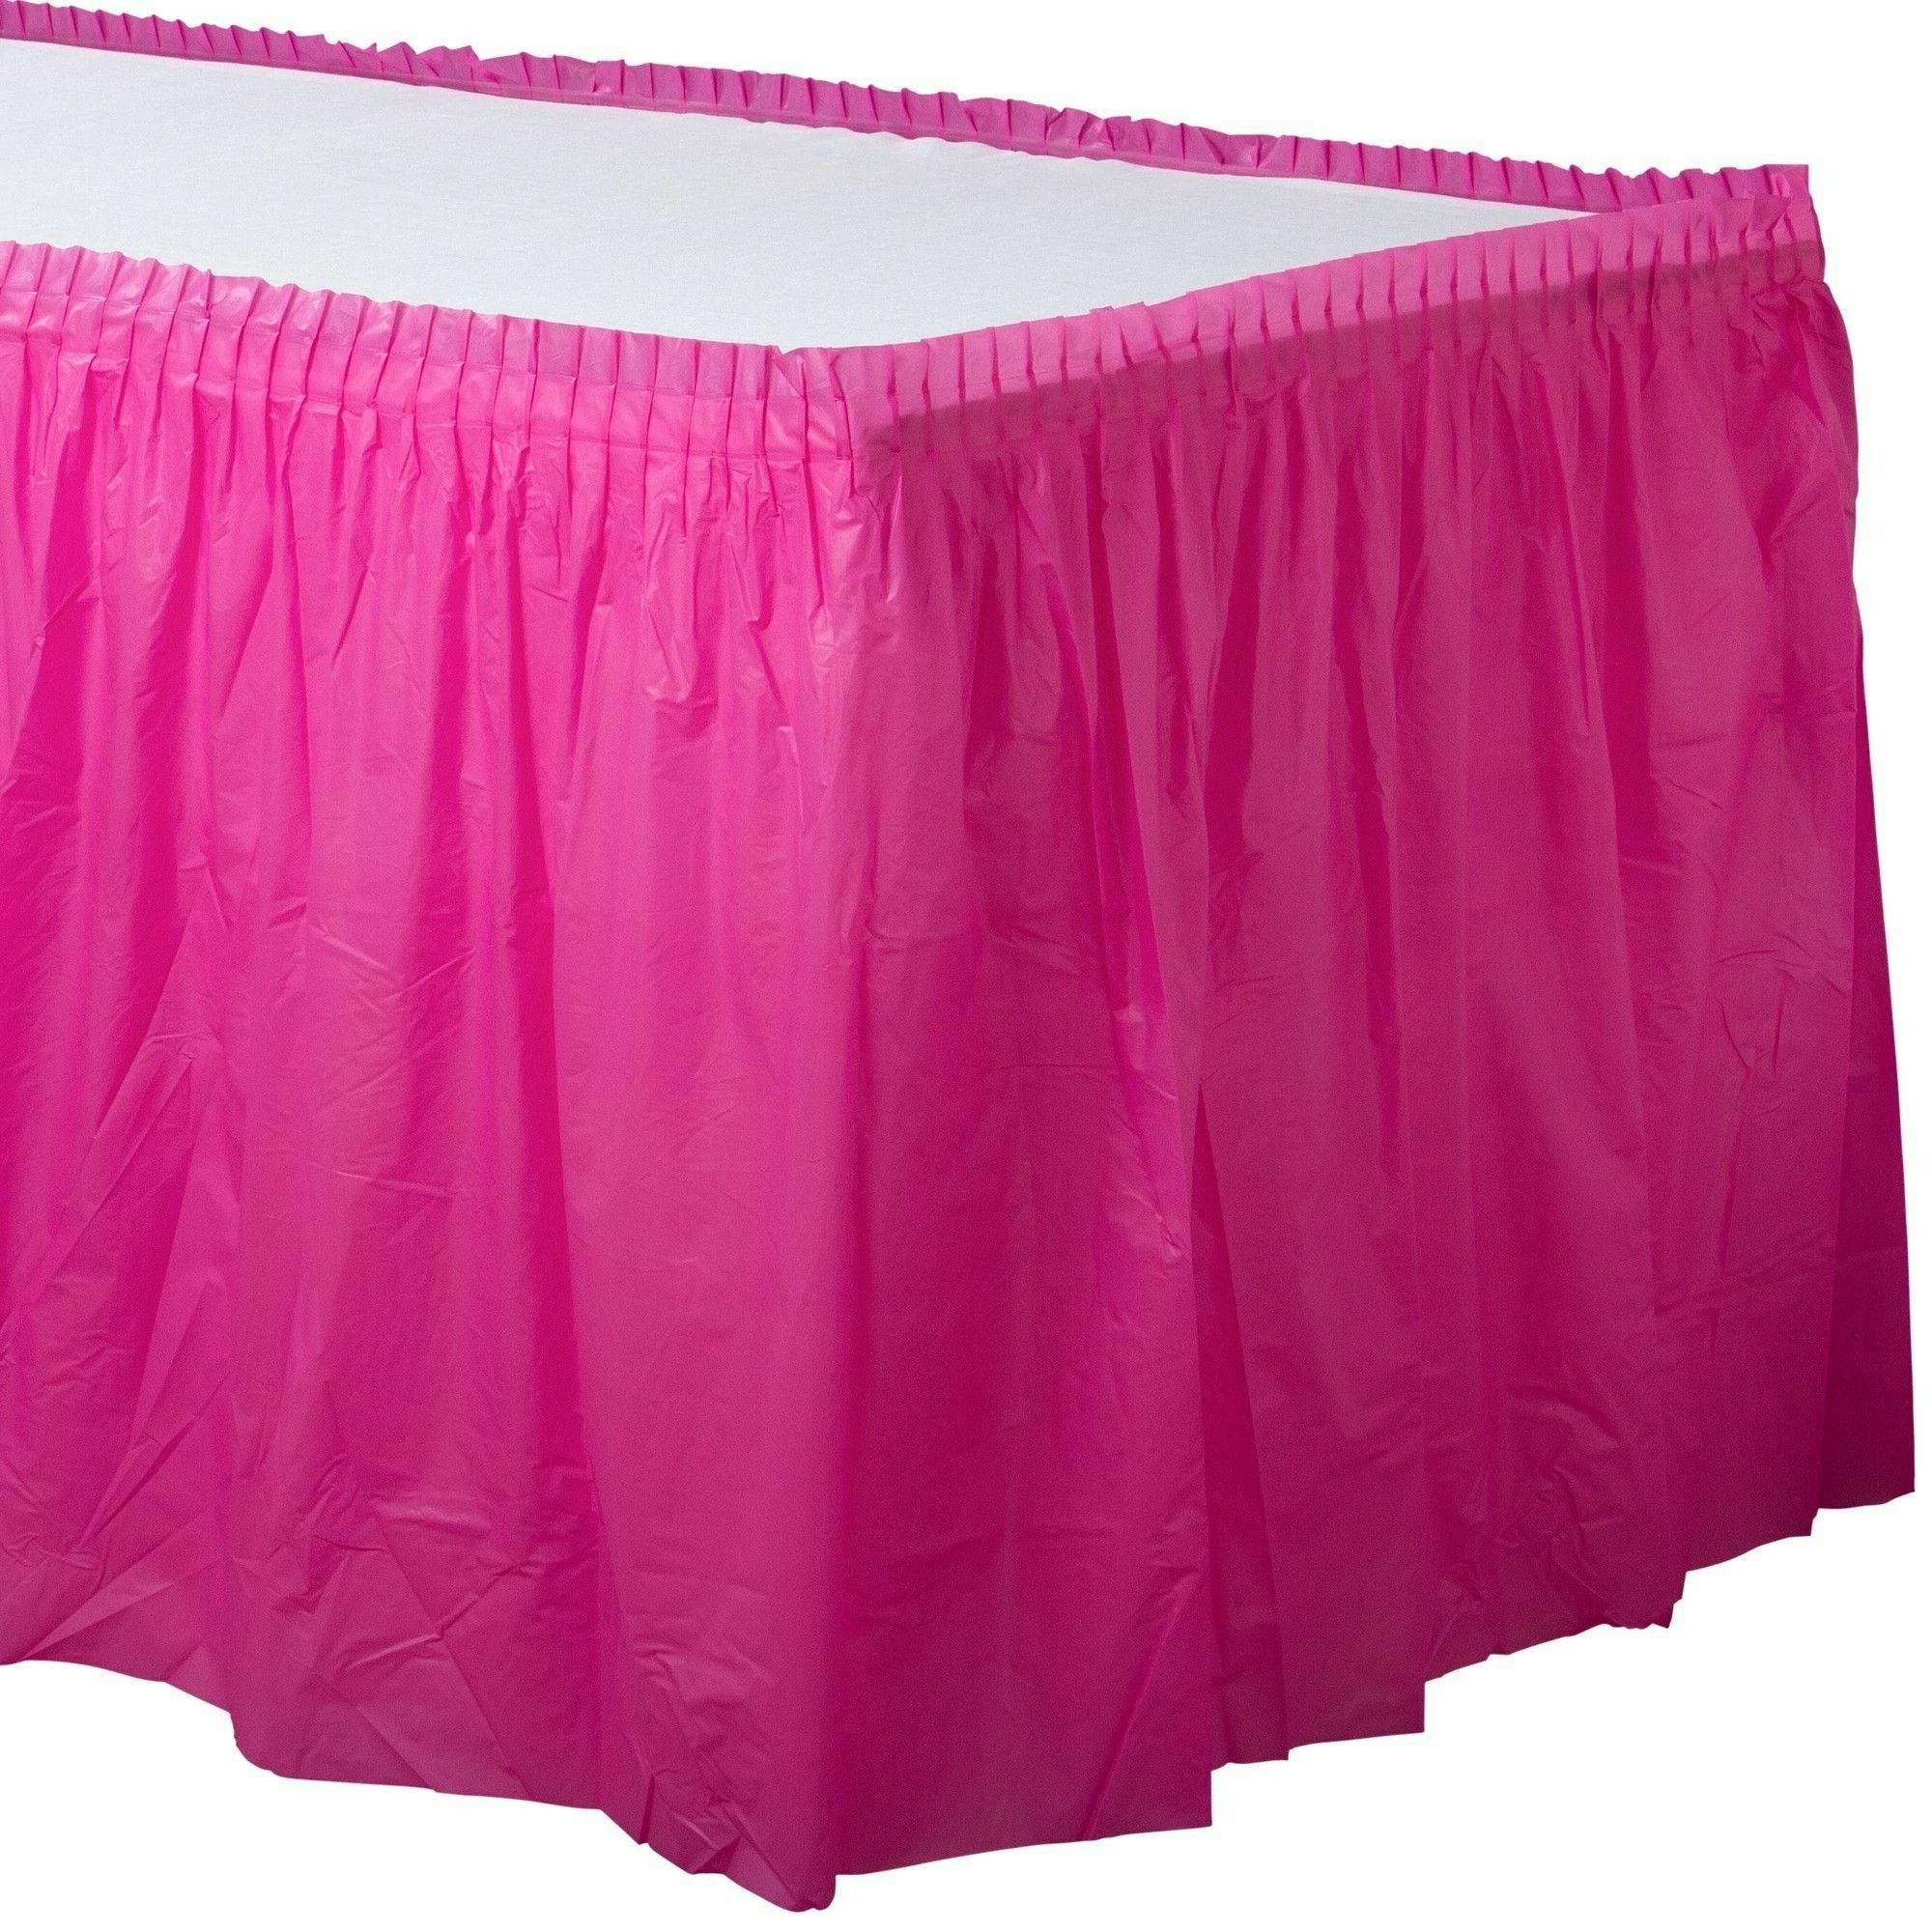 Amscan BASIC Bright Pink - Plastic Table Skirt